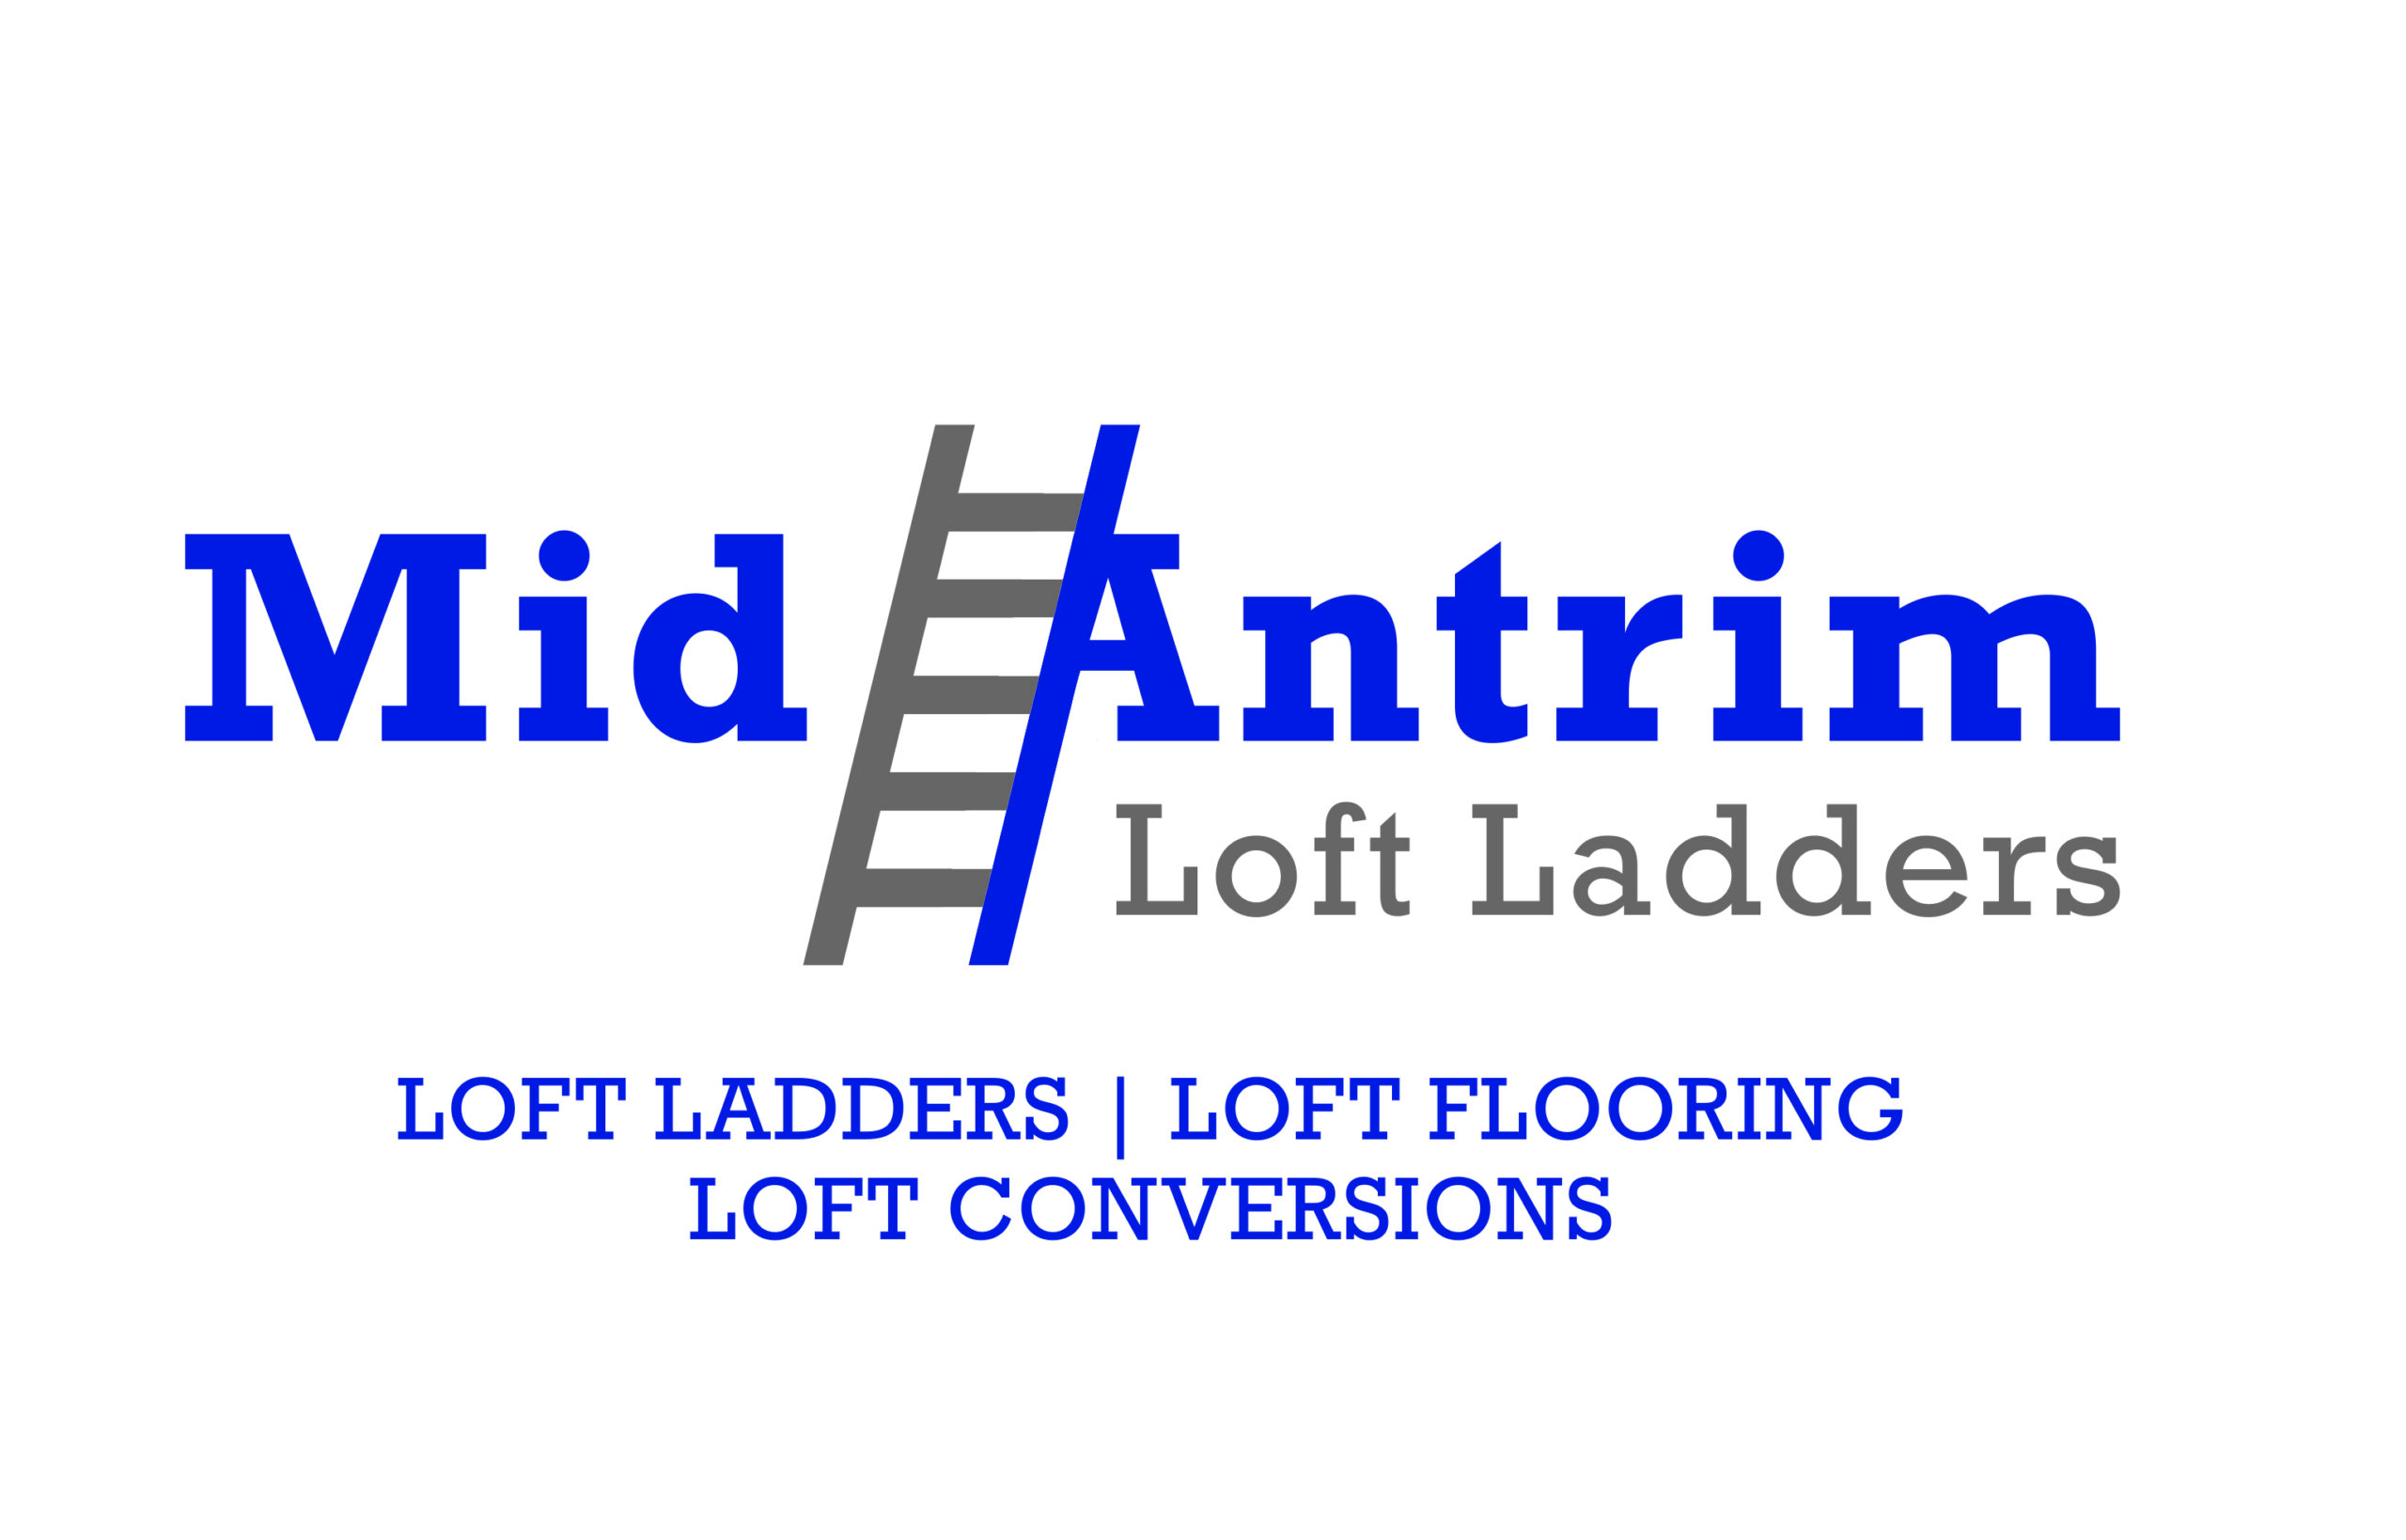 Mid Antrim Loft Ladders logo with strap